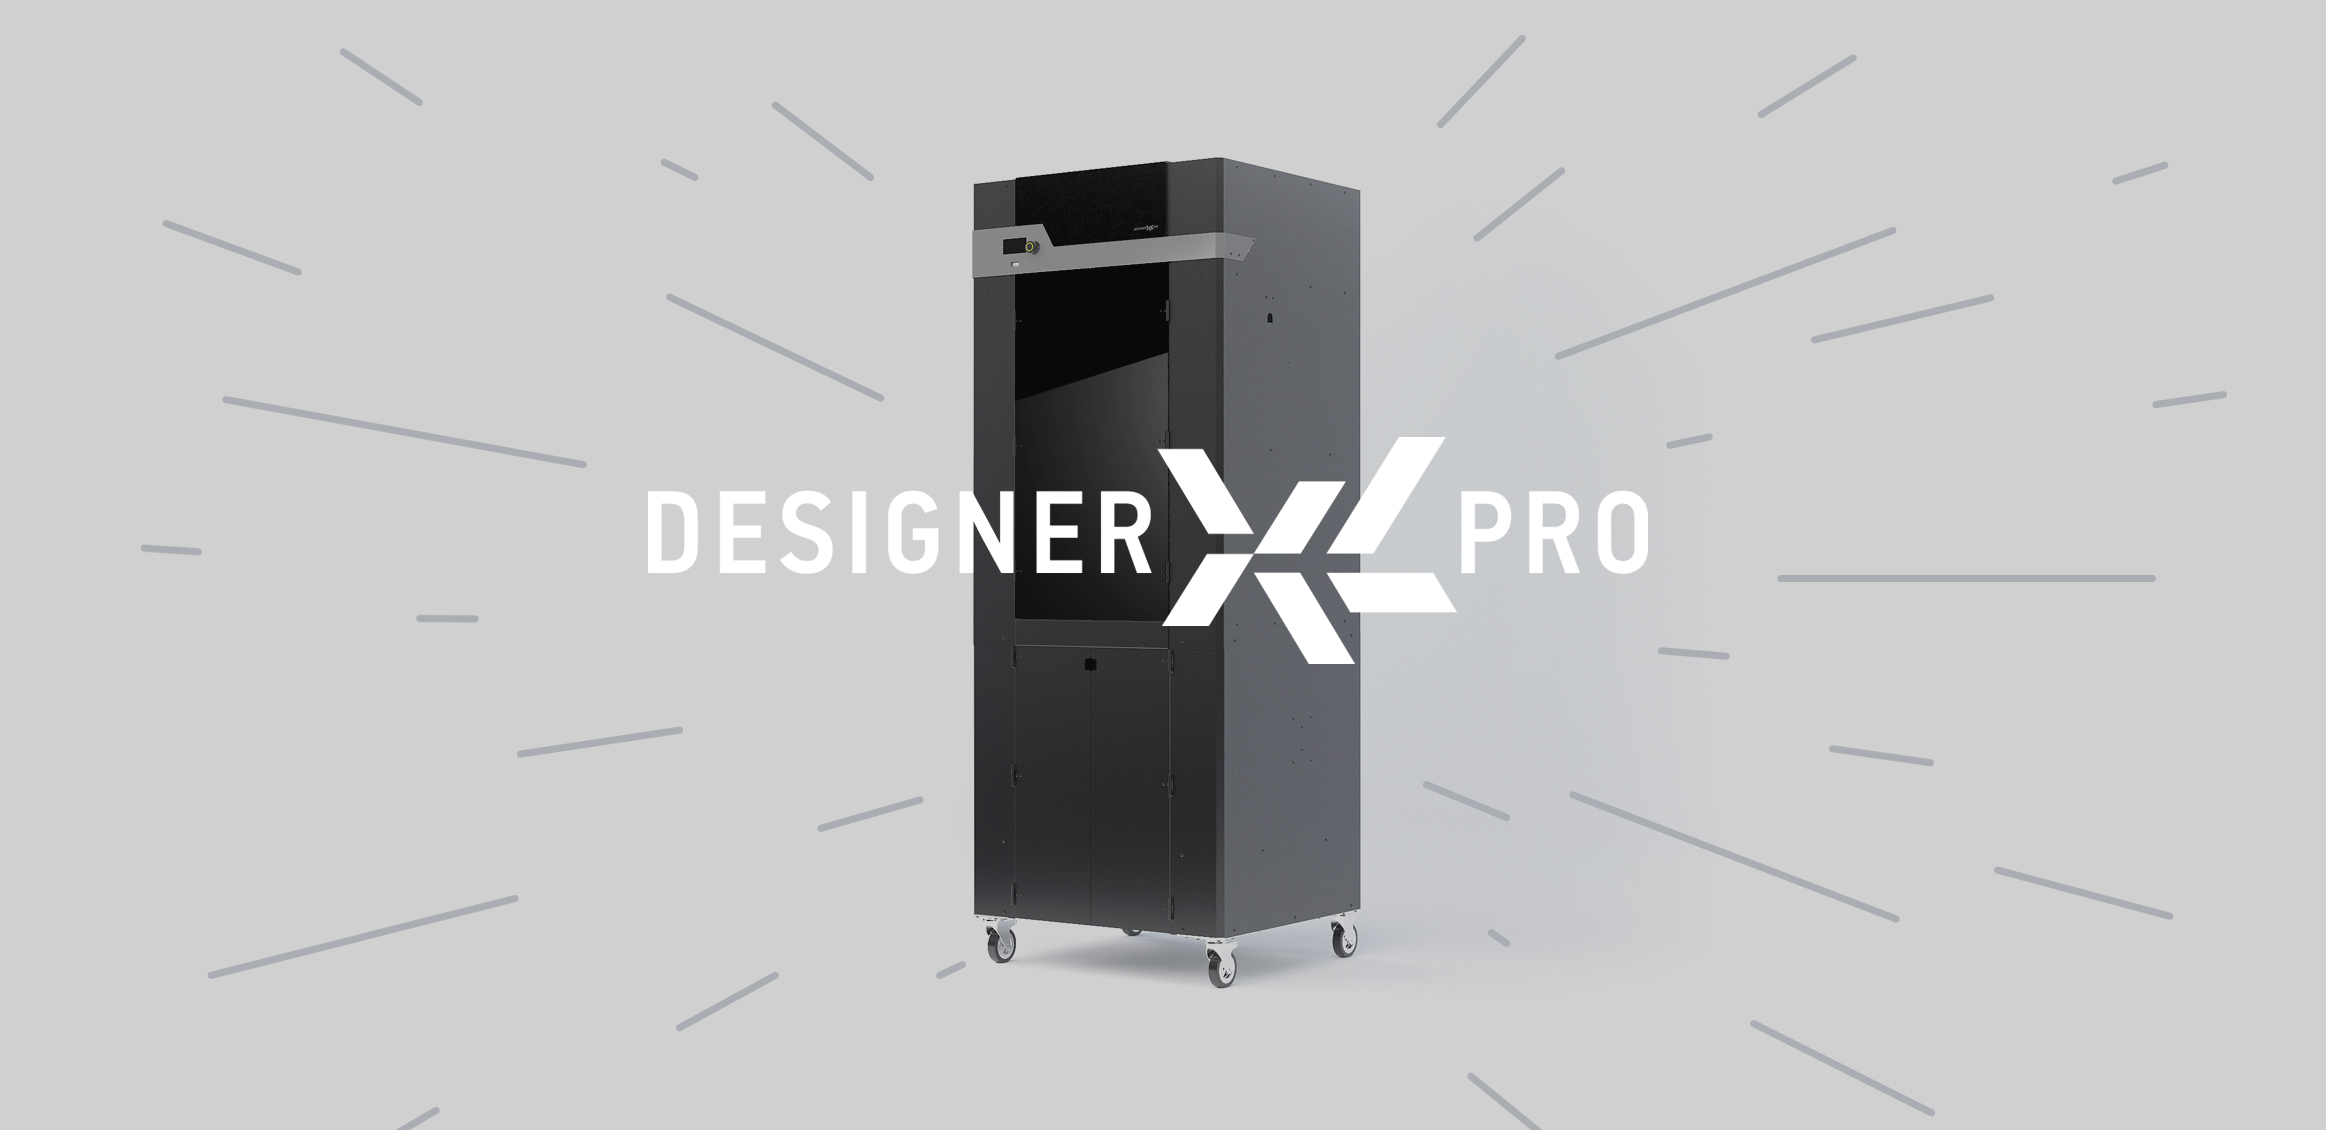 Designer XL Pro